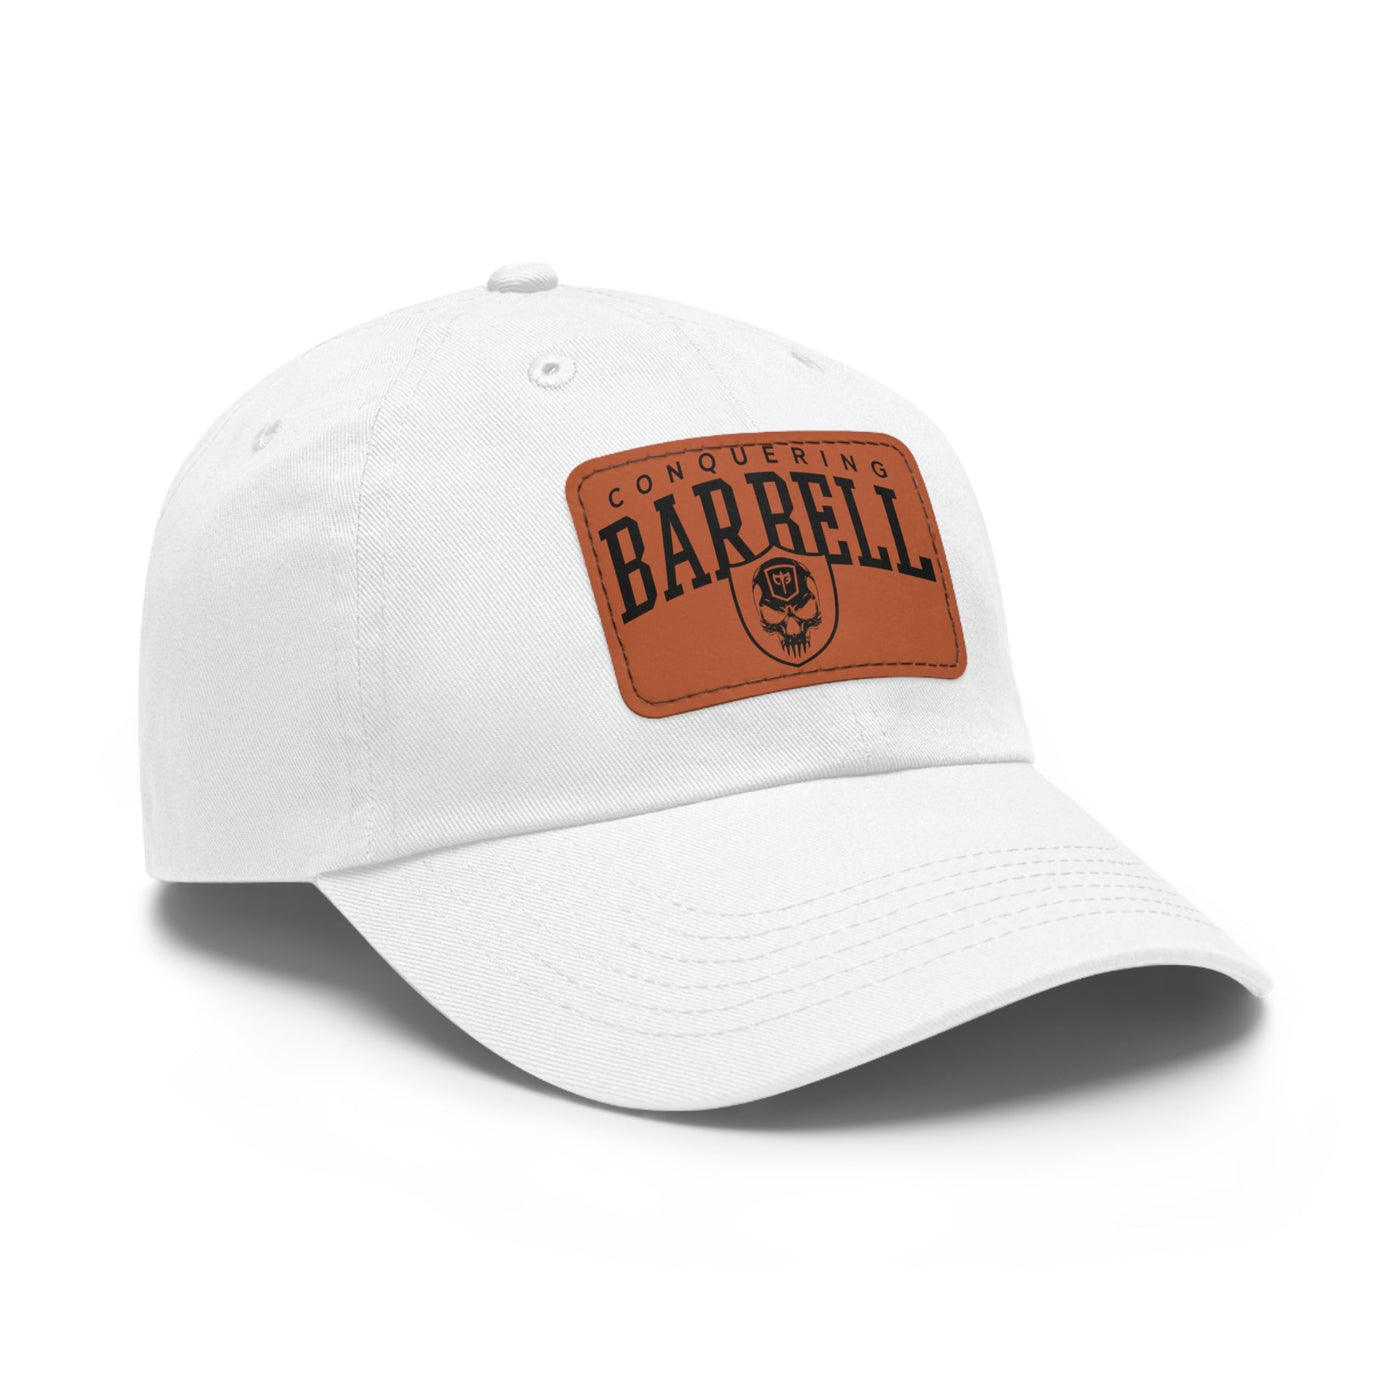 CB Athletics - Dad Hat - Conquering Barbell